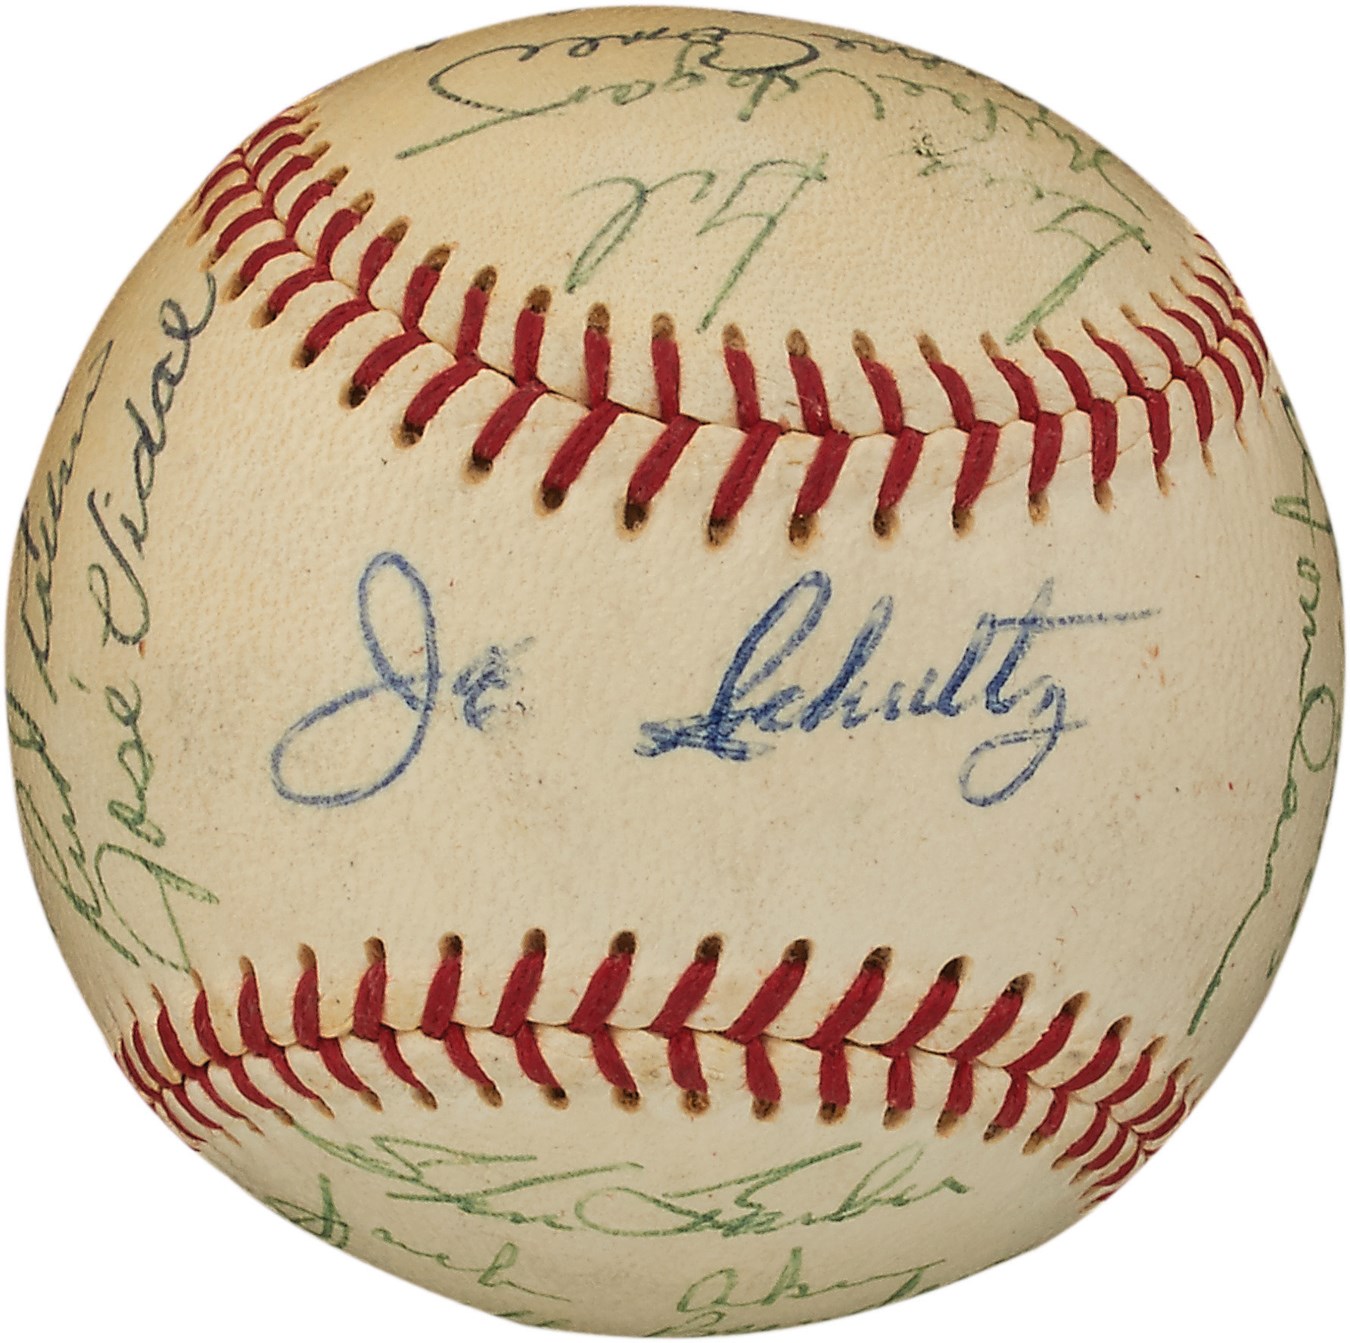 Baseball Memorabilia - 1969 Seattle Pilots Team-Signed Baseball